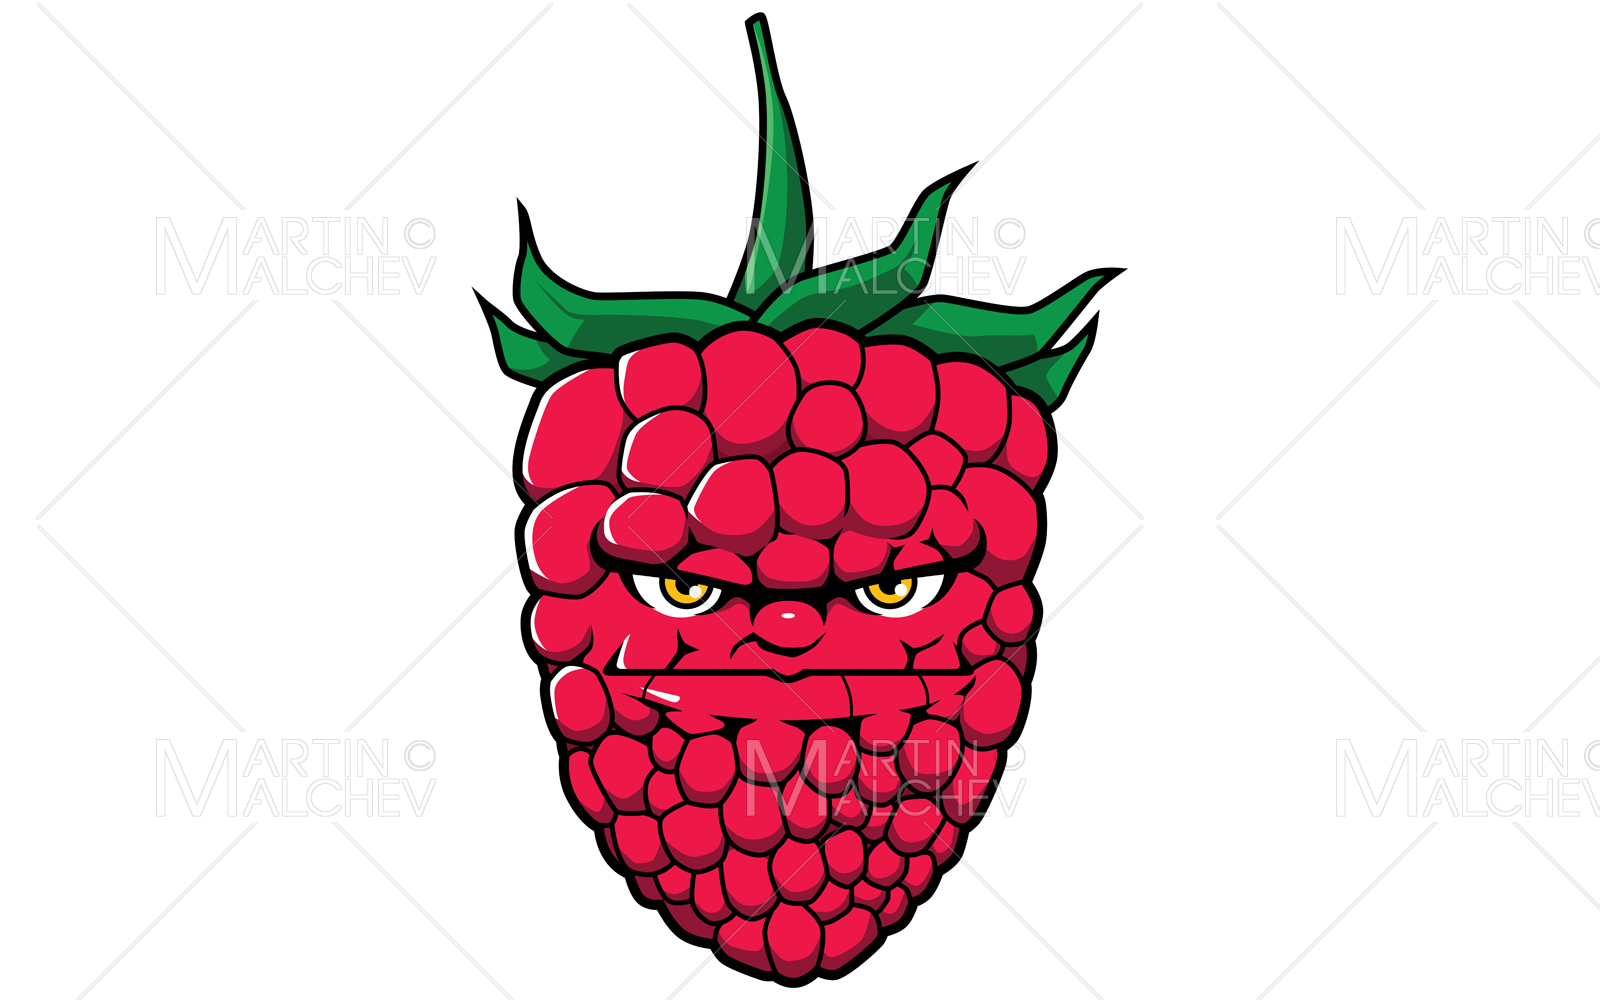 Raspberry Superhero Mascot Vector Illustration